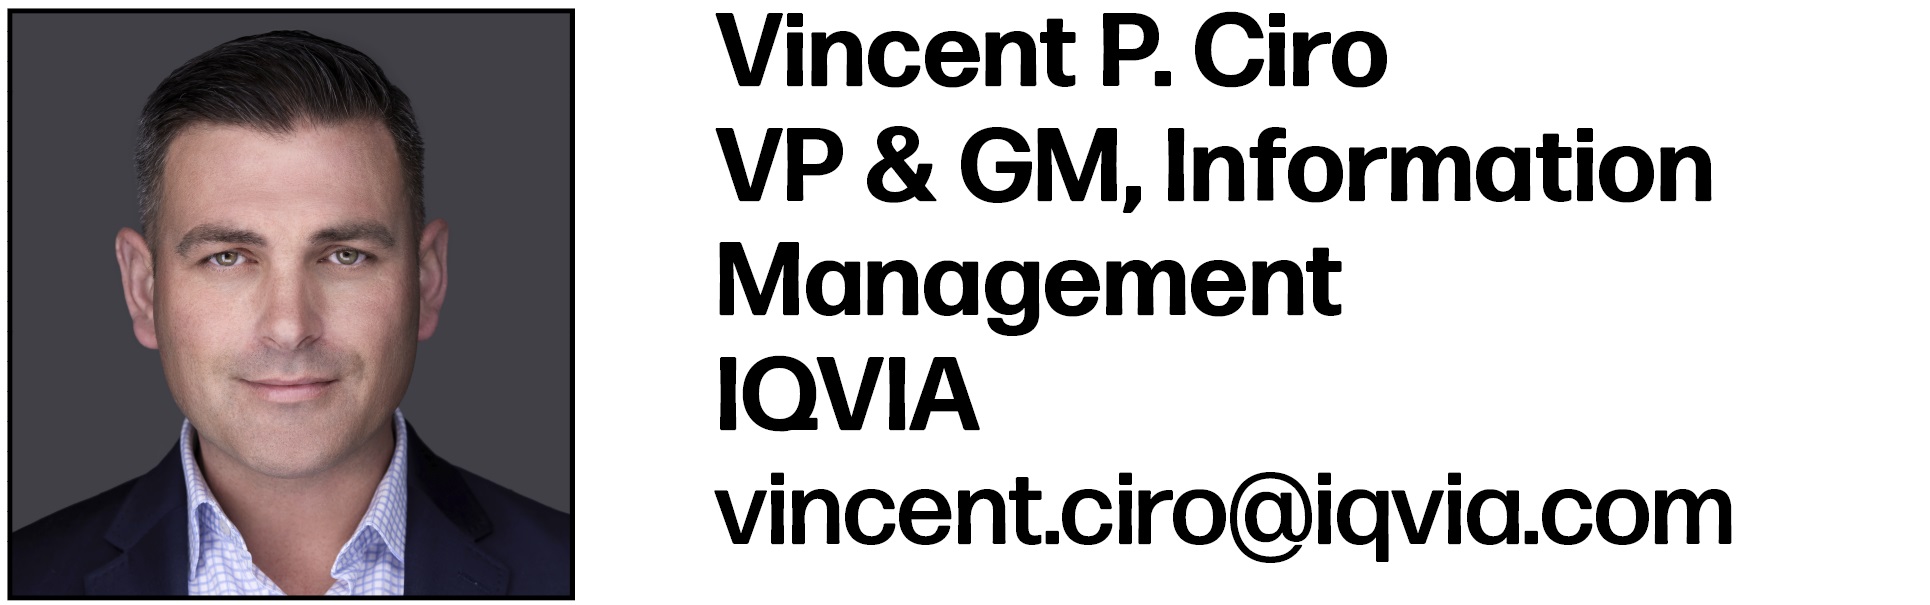 Vincent P. Ciro VP & GM, Information Management IQVIA vincent.ciro@iqvia.com